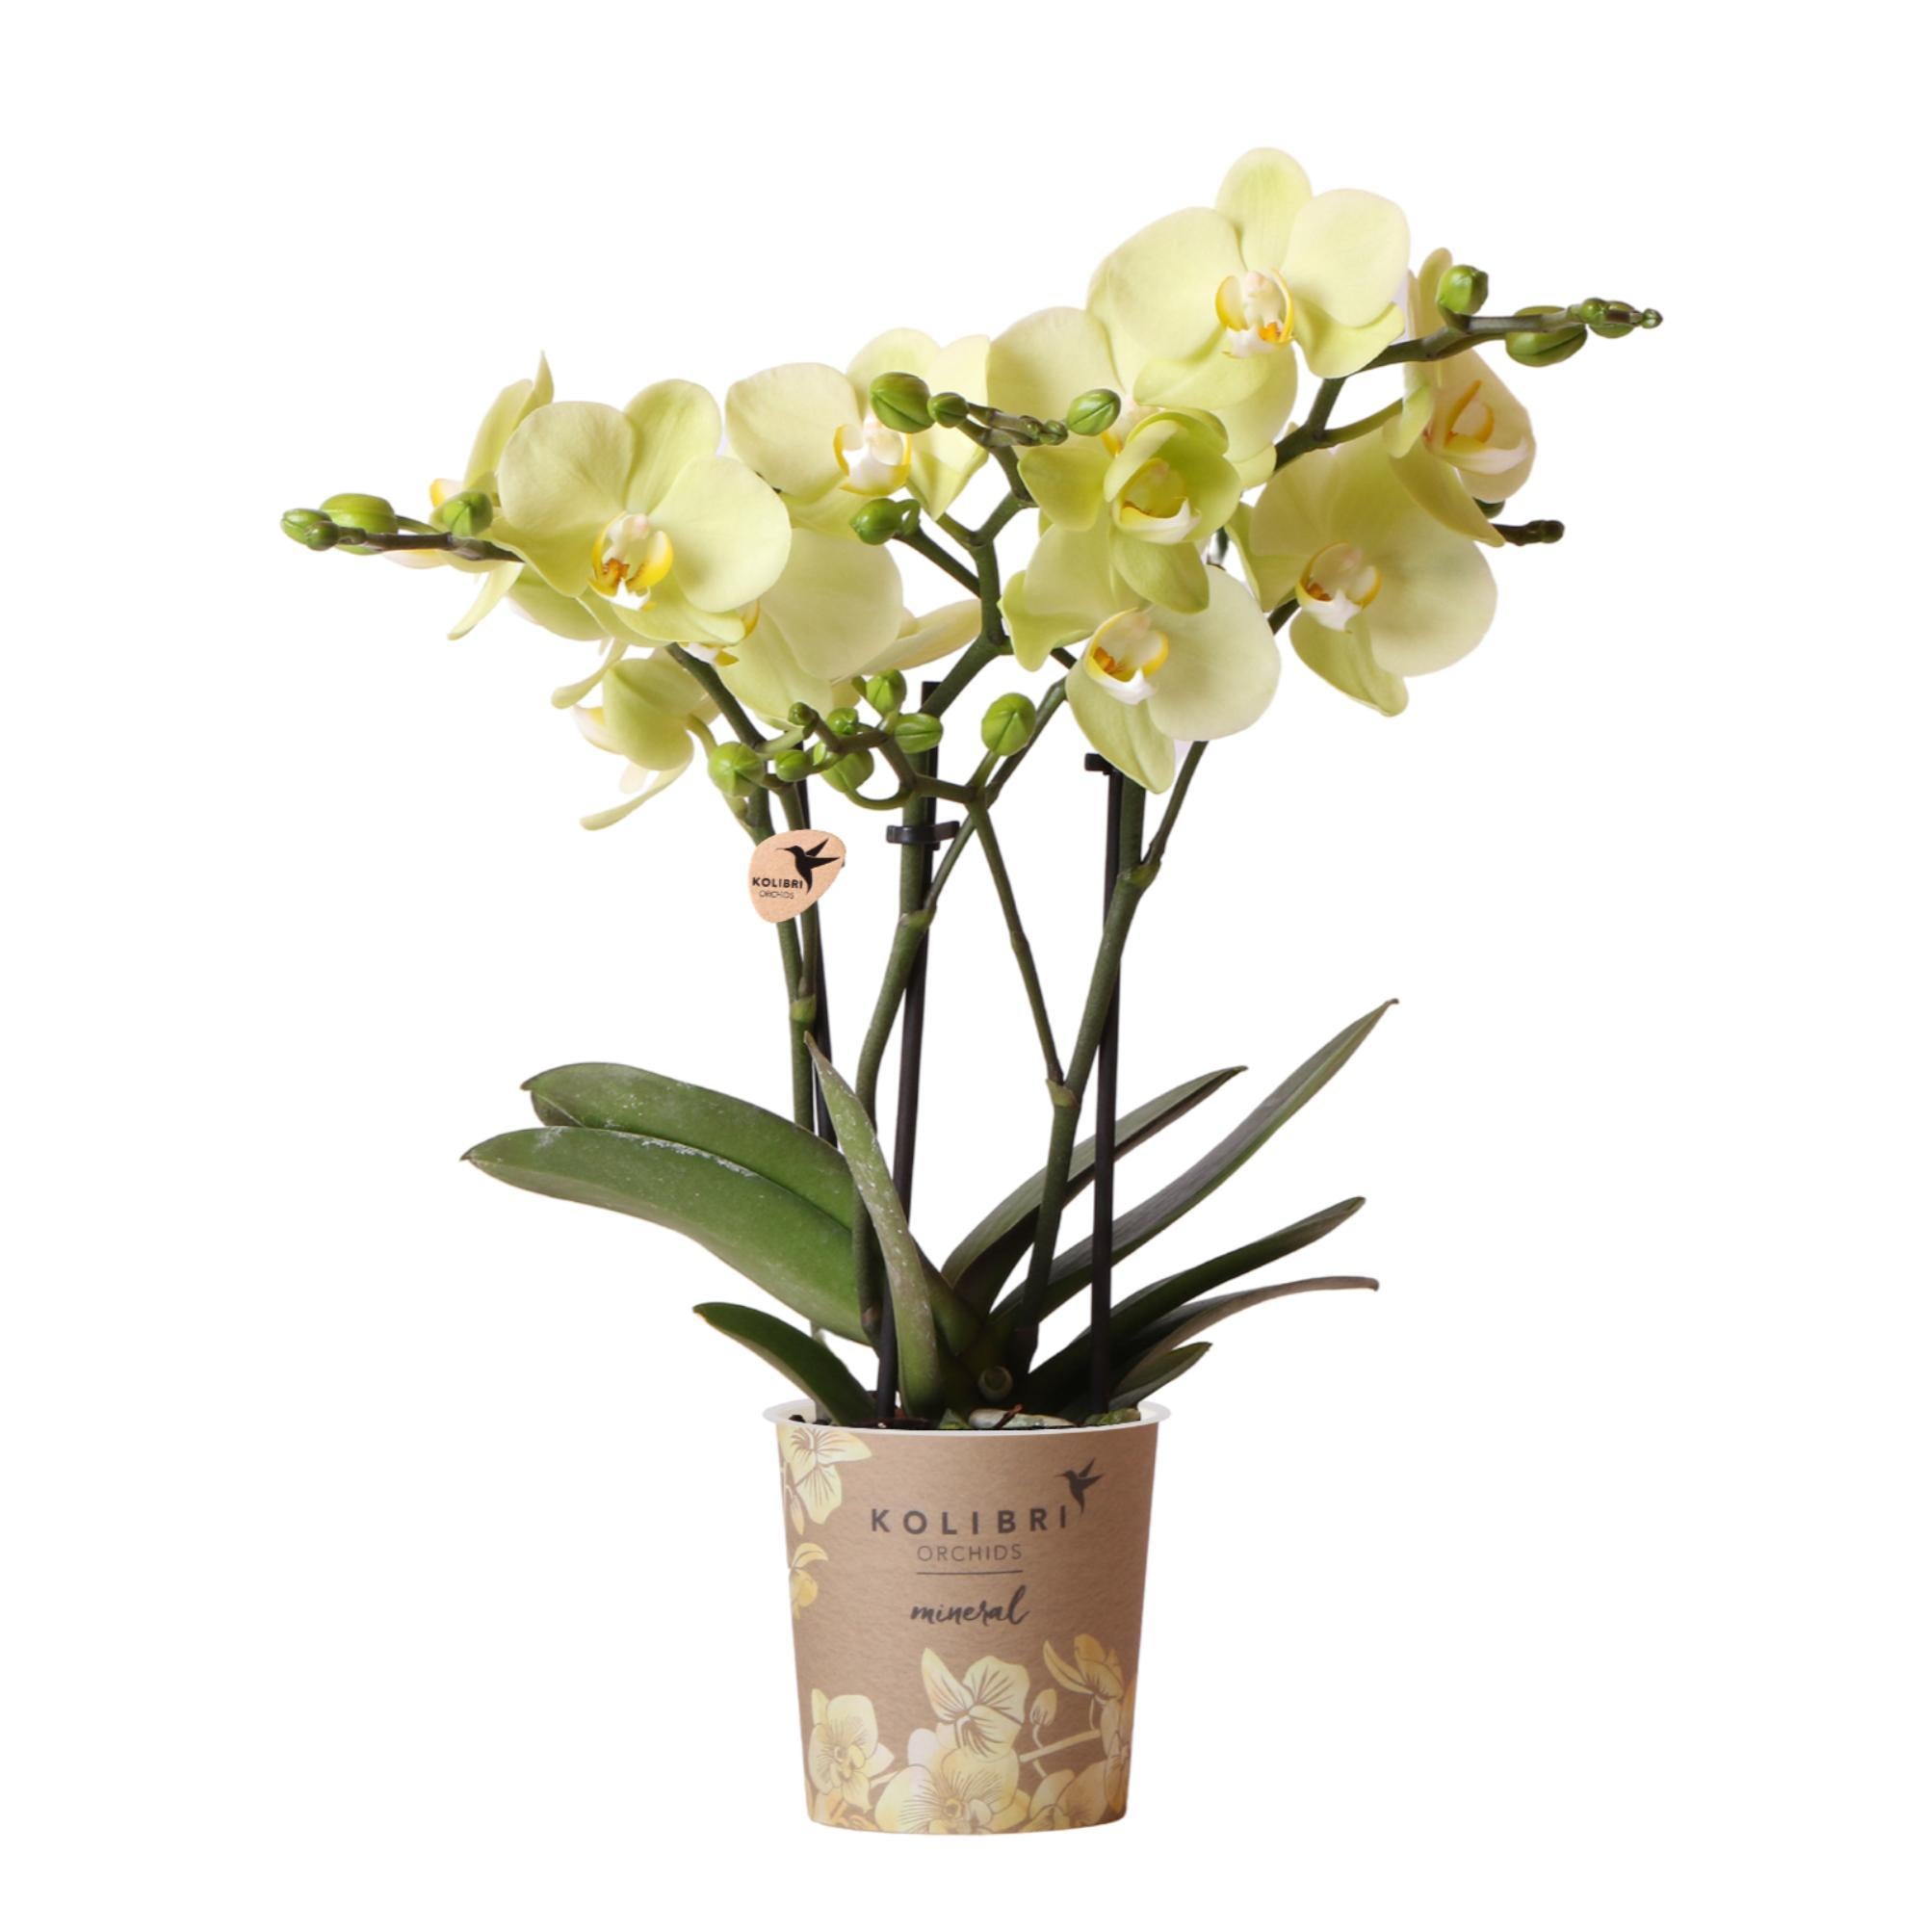 Gelbe Phalaenopsis-Orchidee kaufen